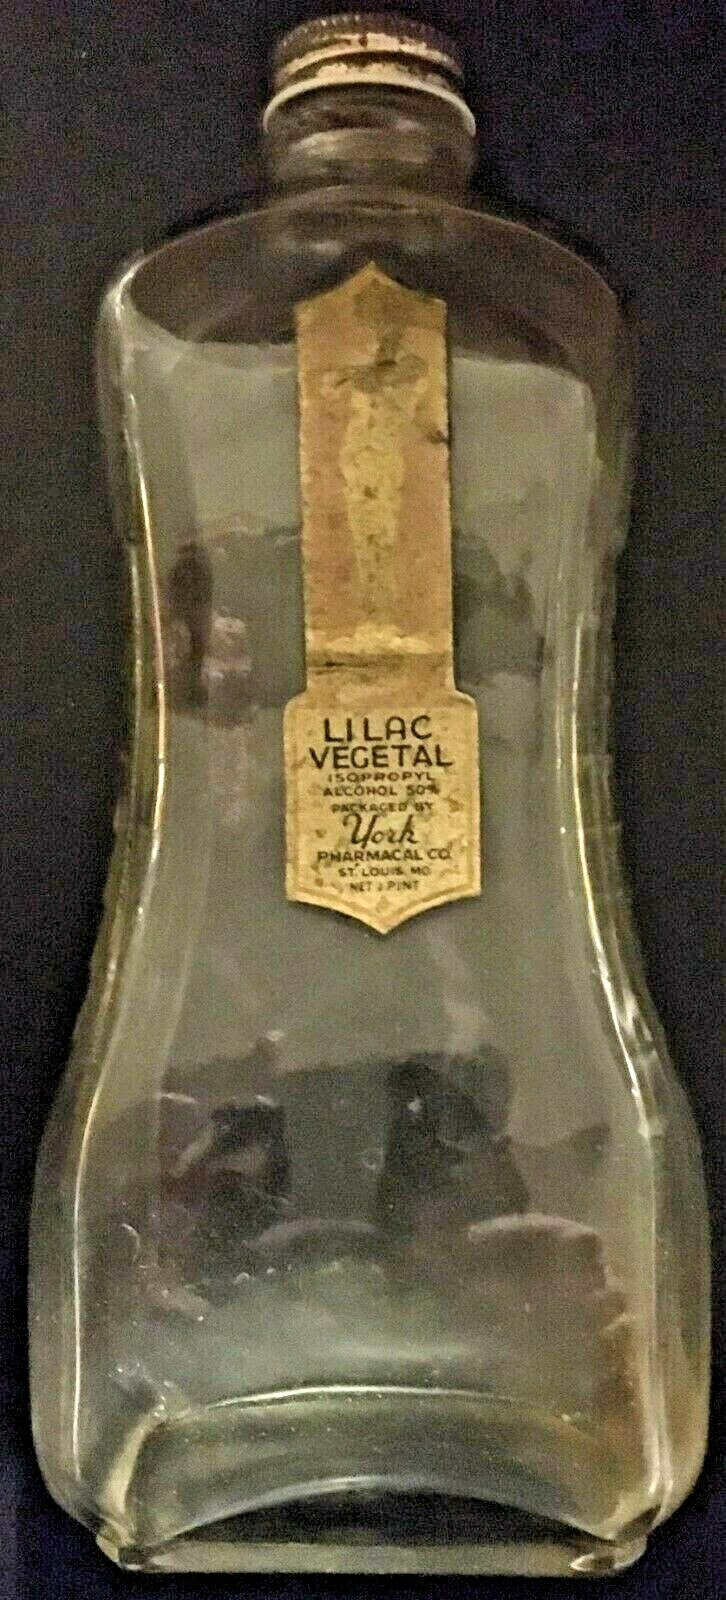 1920s LILAC VEGETAL Bottle York Pharmacal Co. - ST. Louis, MO. - Original Label